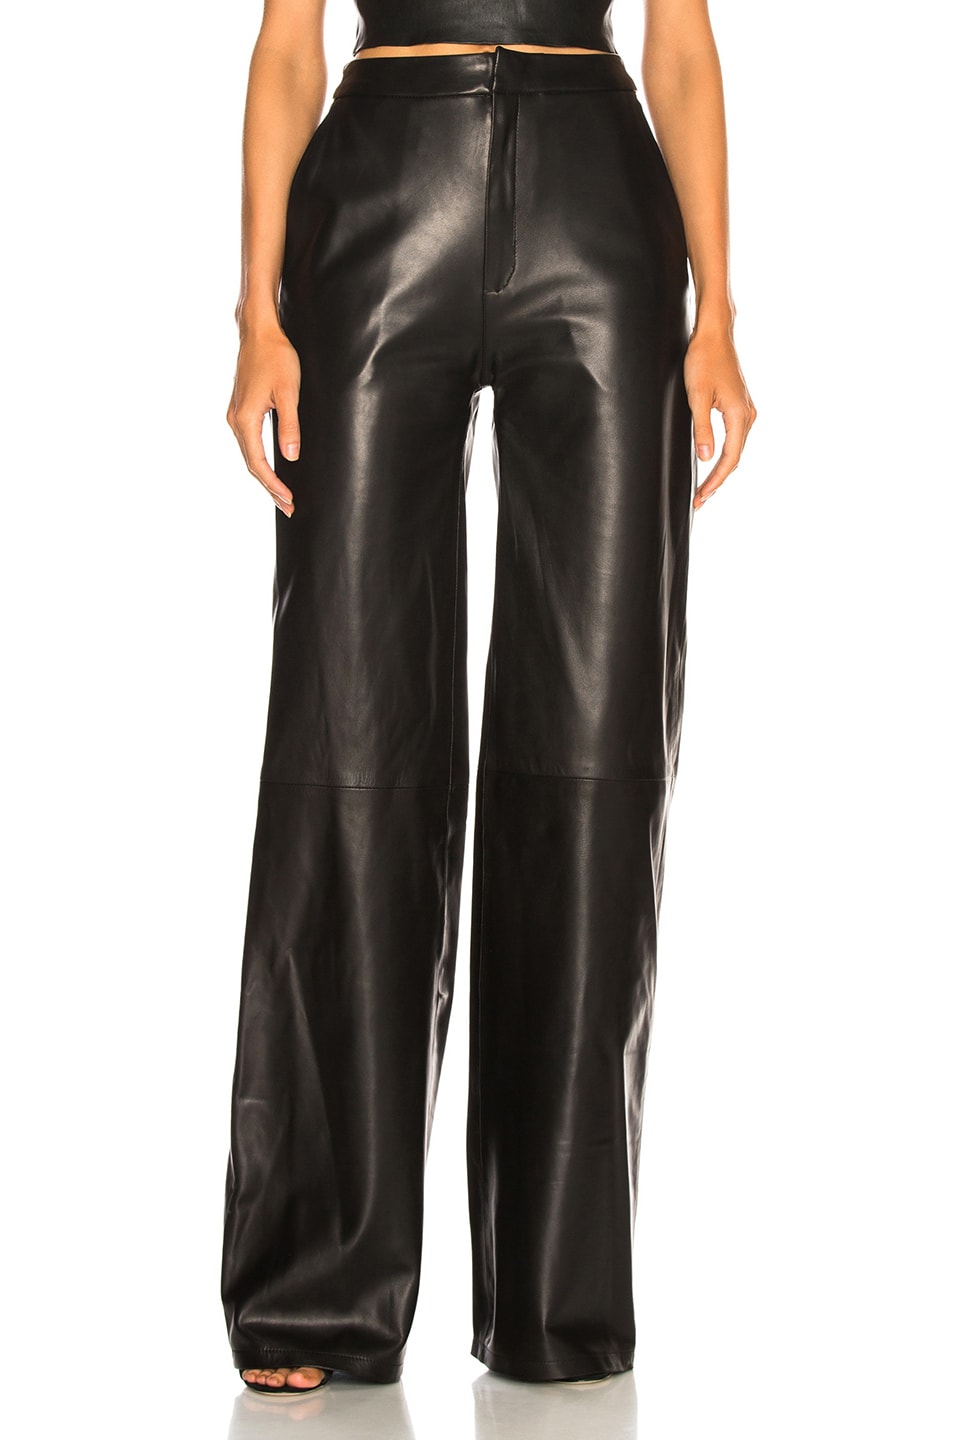 SABLYN Josephine Wide Leg Leather Pants in Black | FWRD